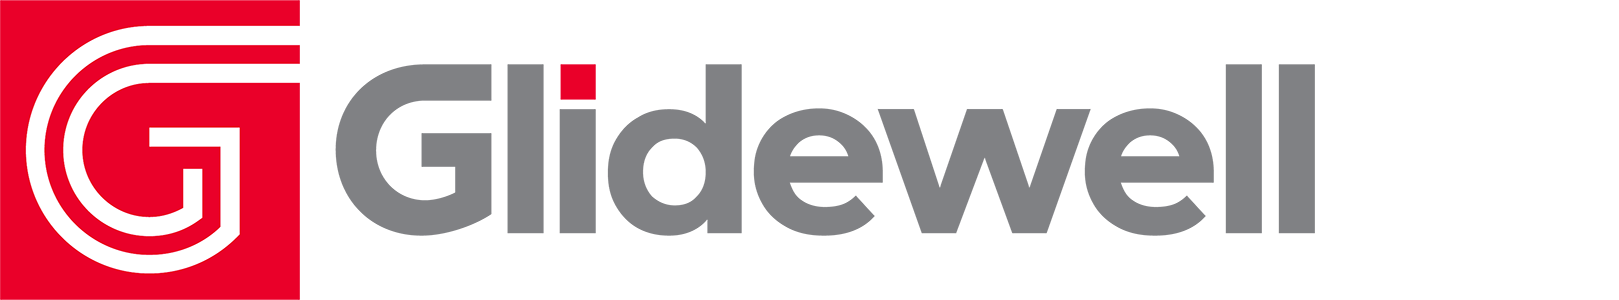 glidewell_logo